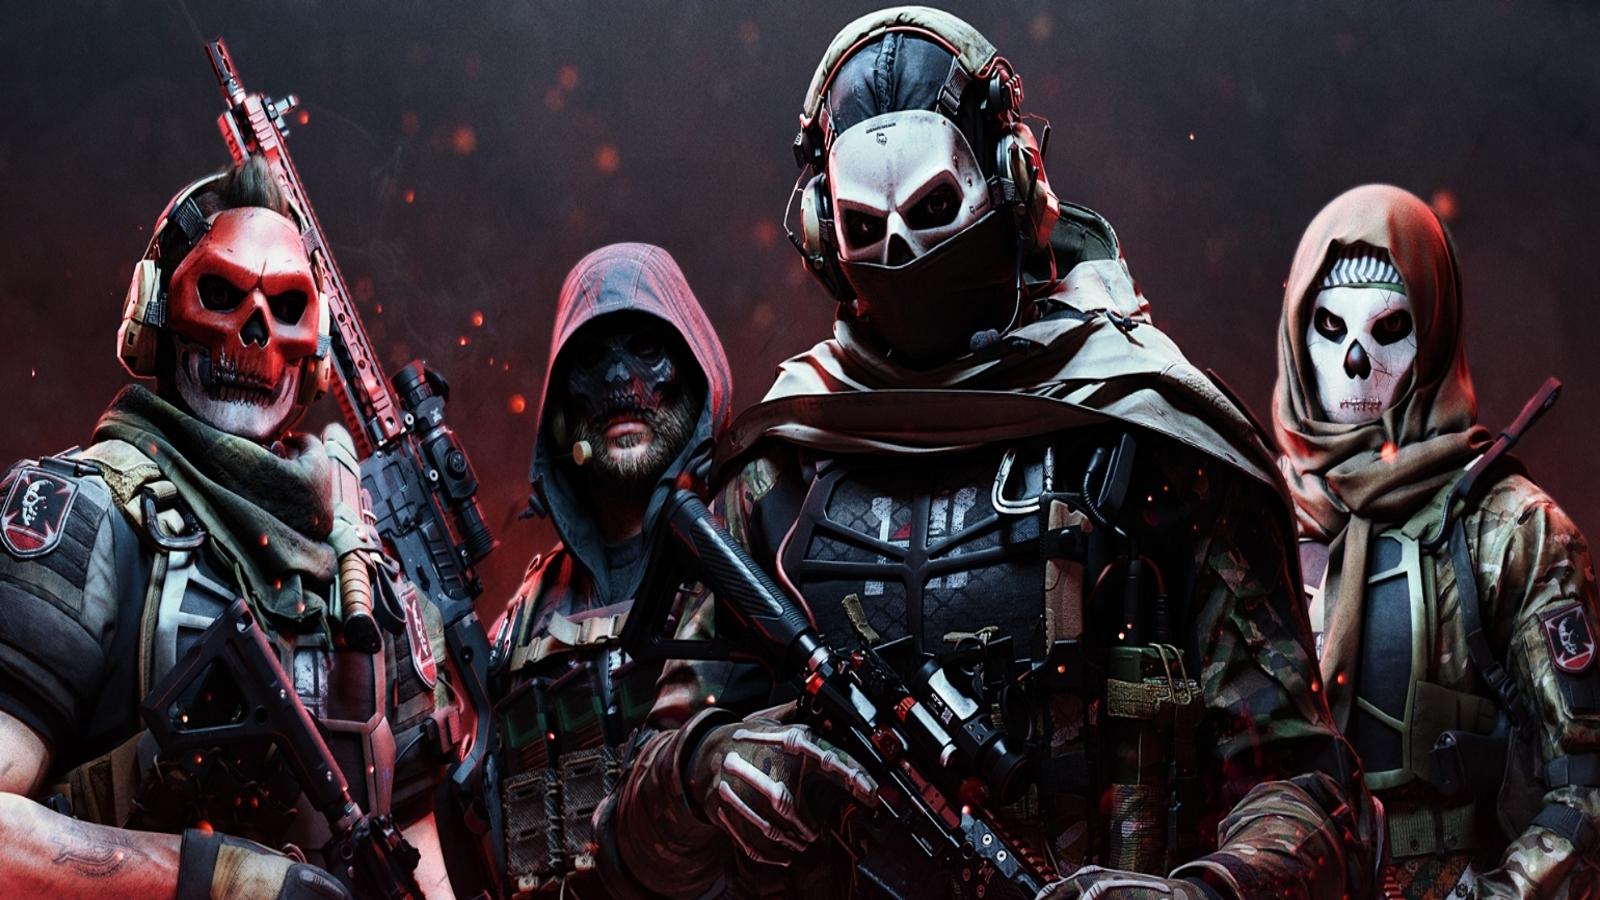 Is Modern Warfare 2 coming to Xbox Game Pass? - Dexerto